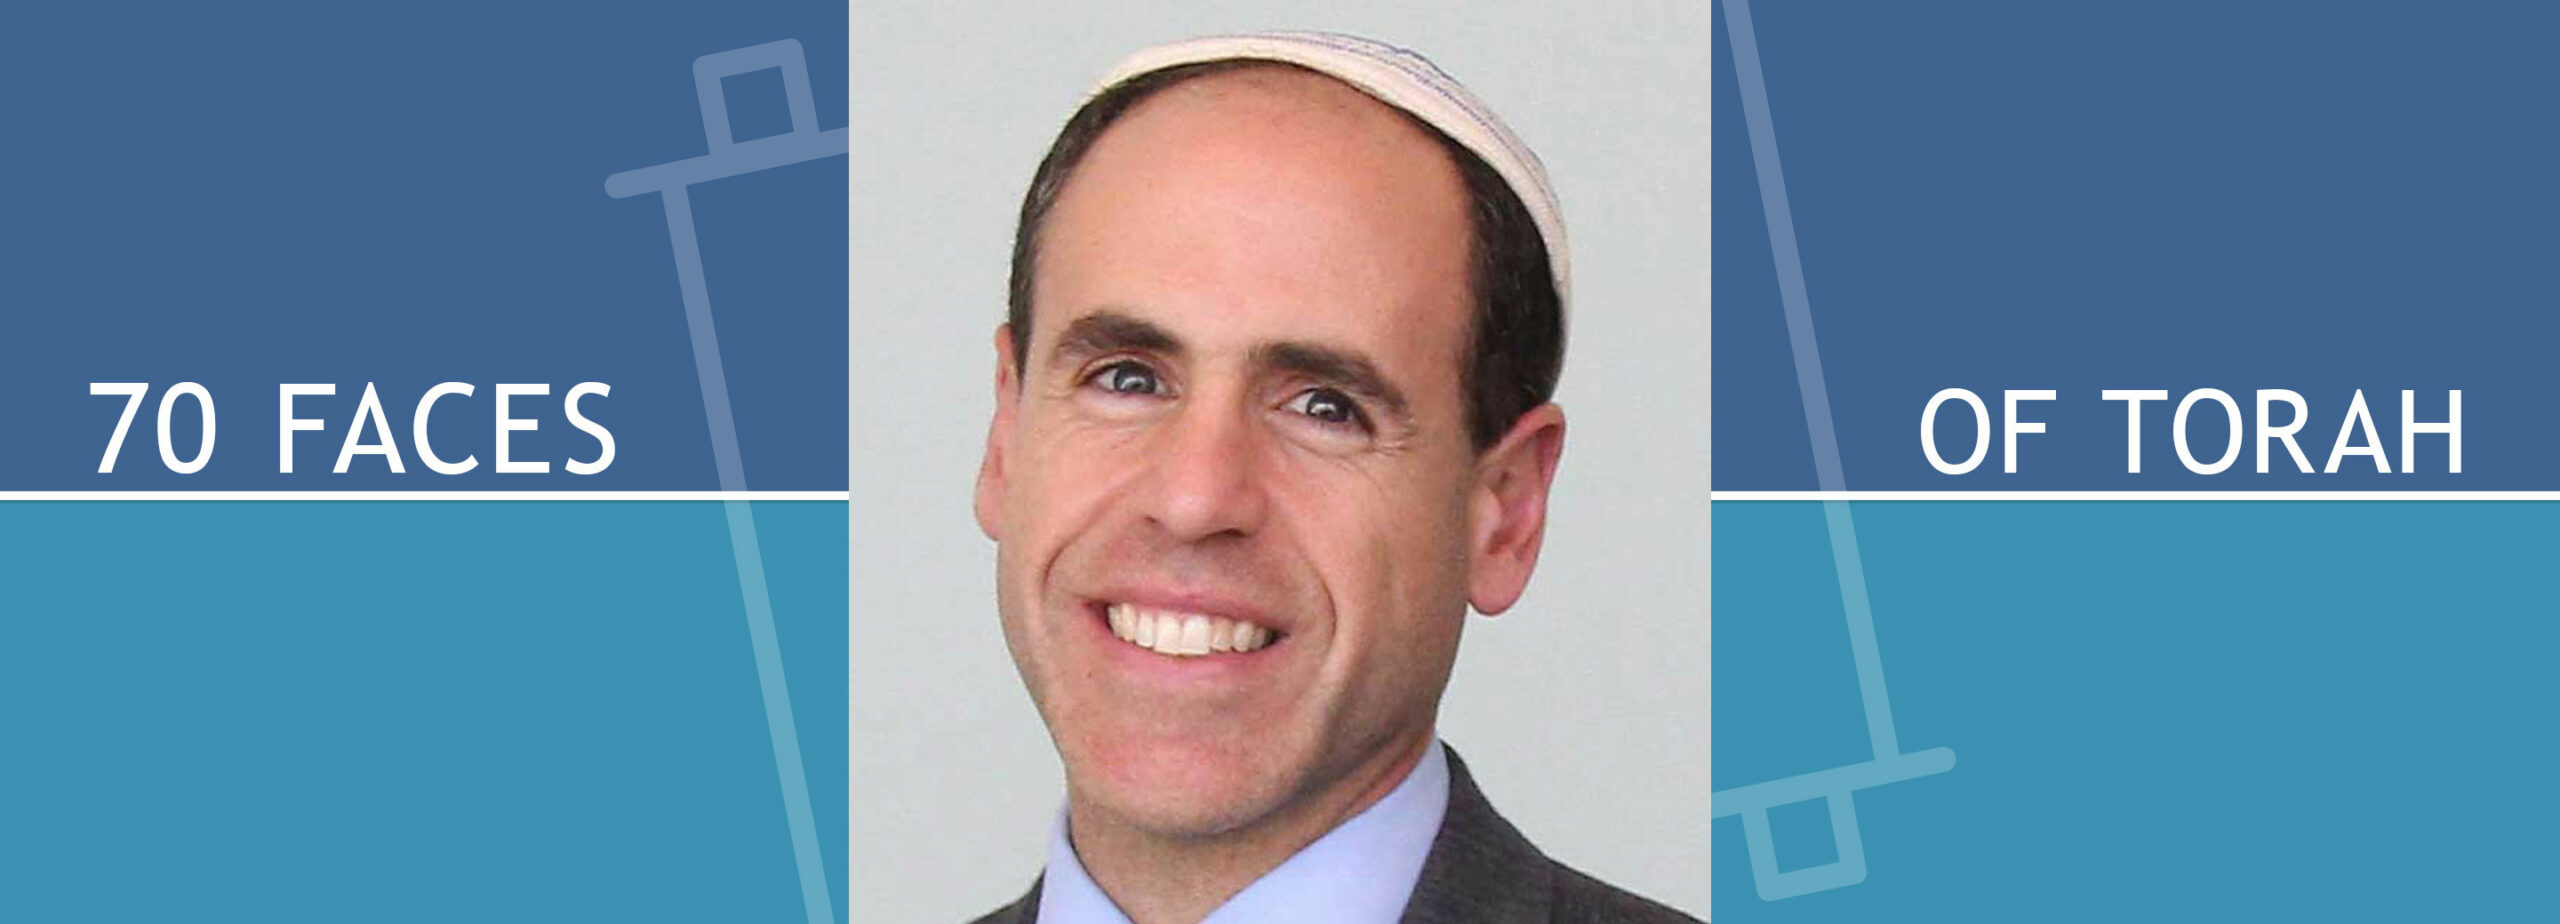 Rabbi Dan Berman 70 Faces